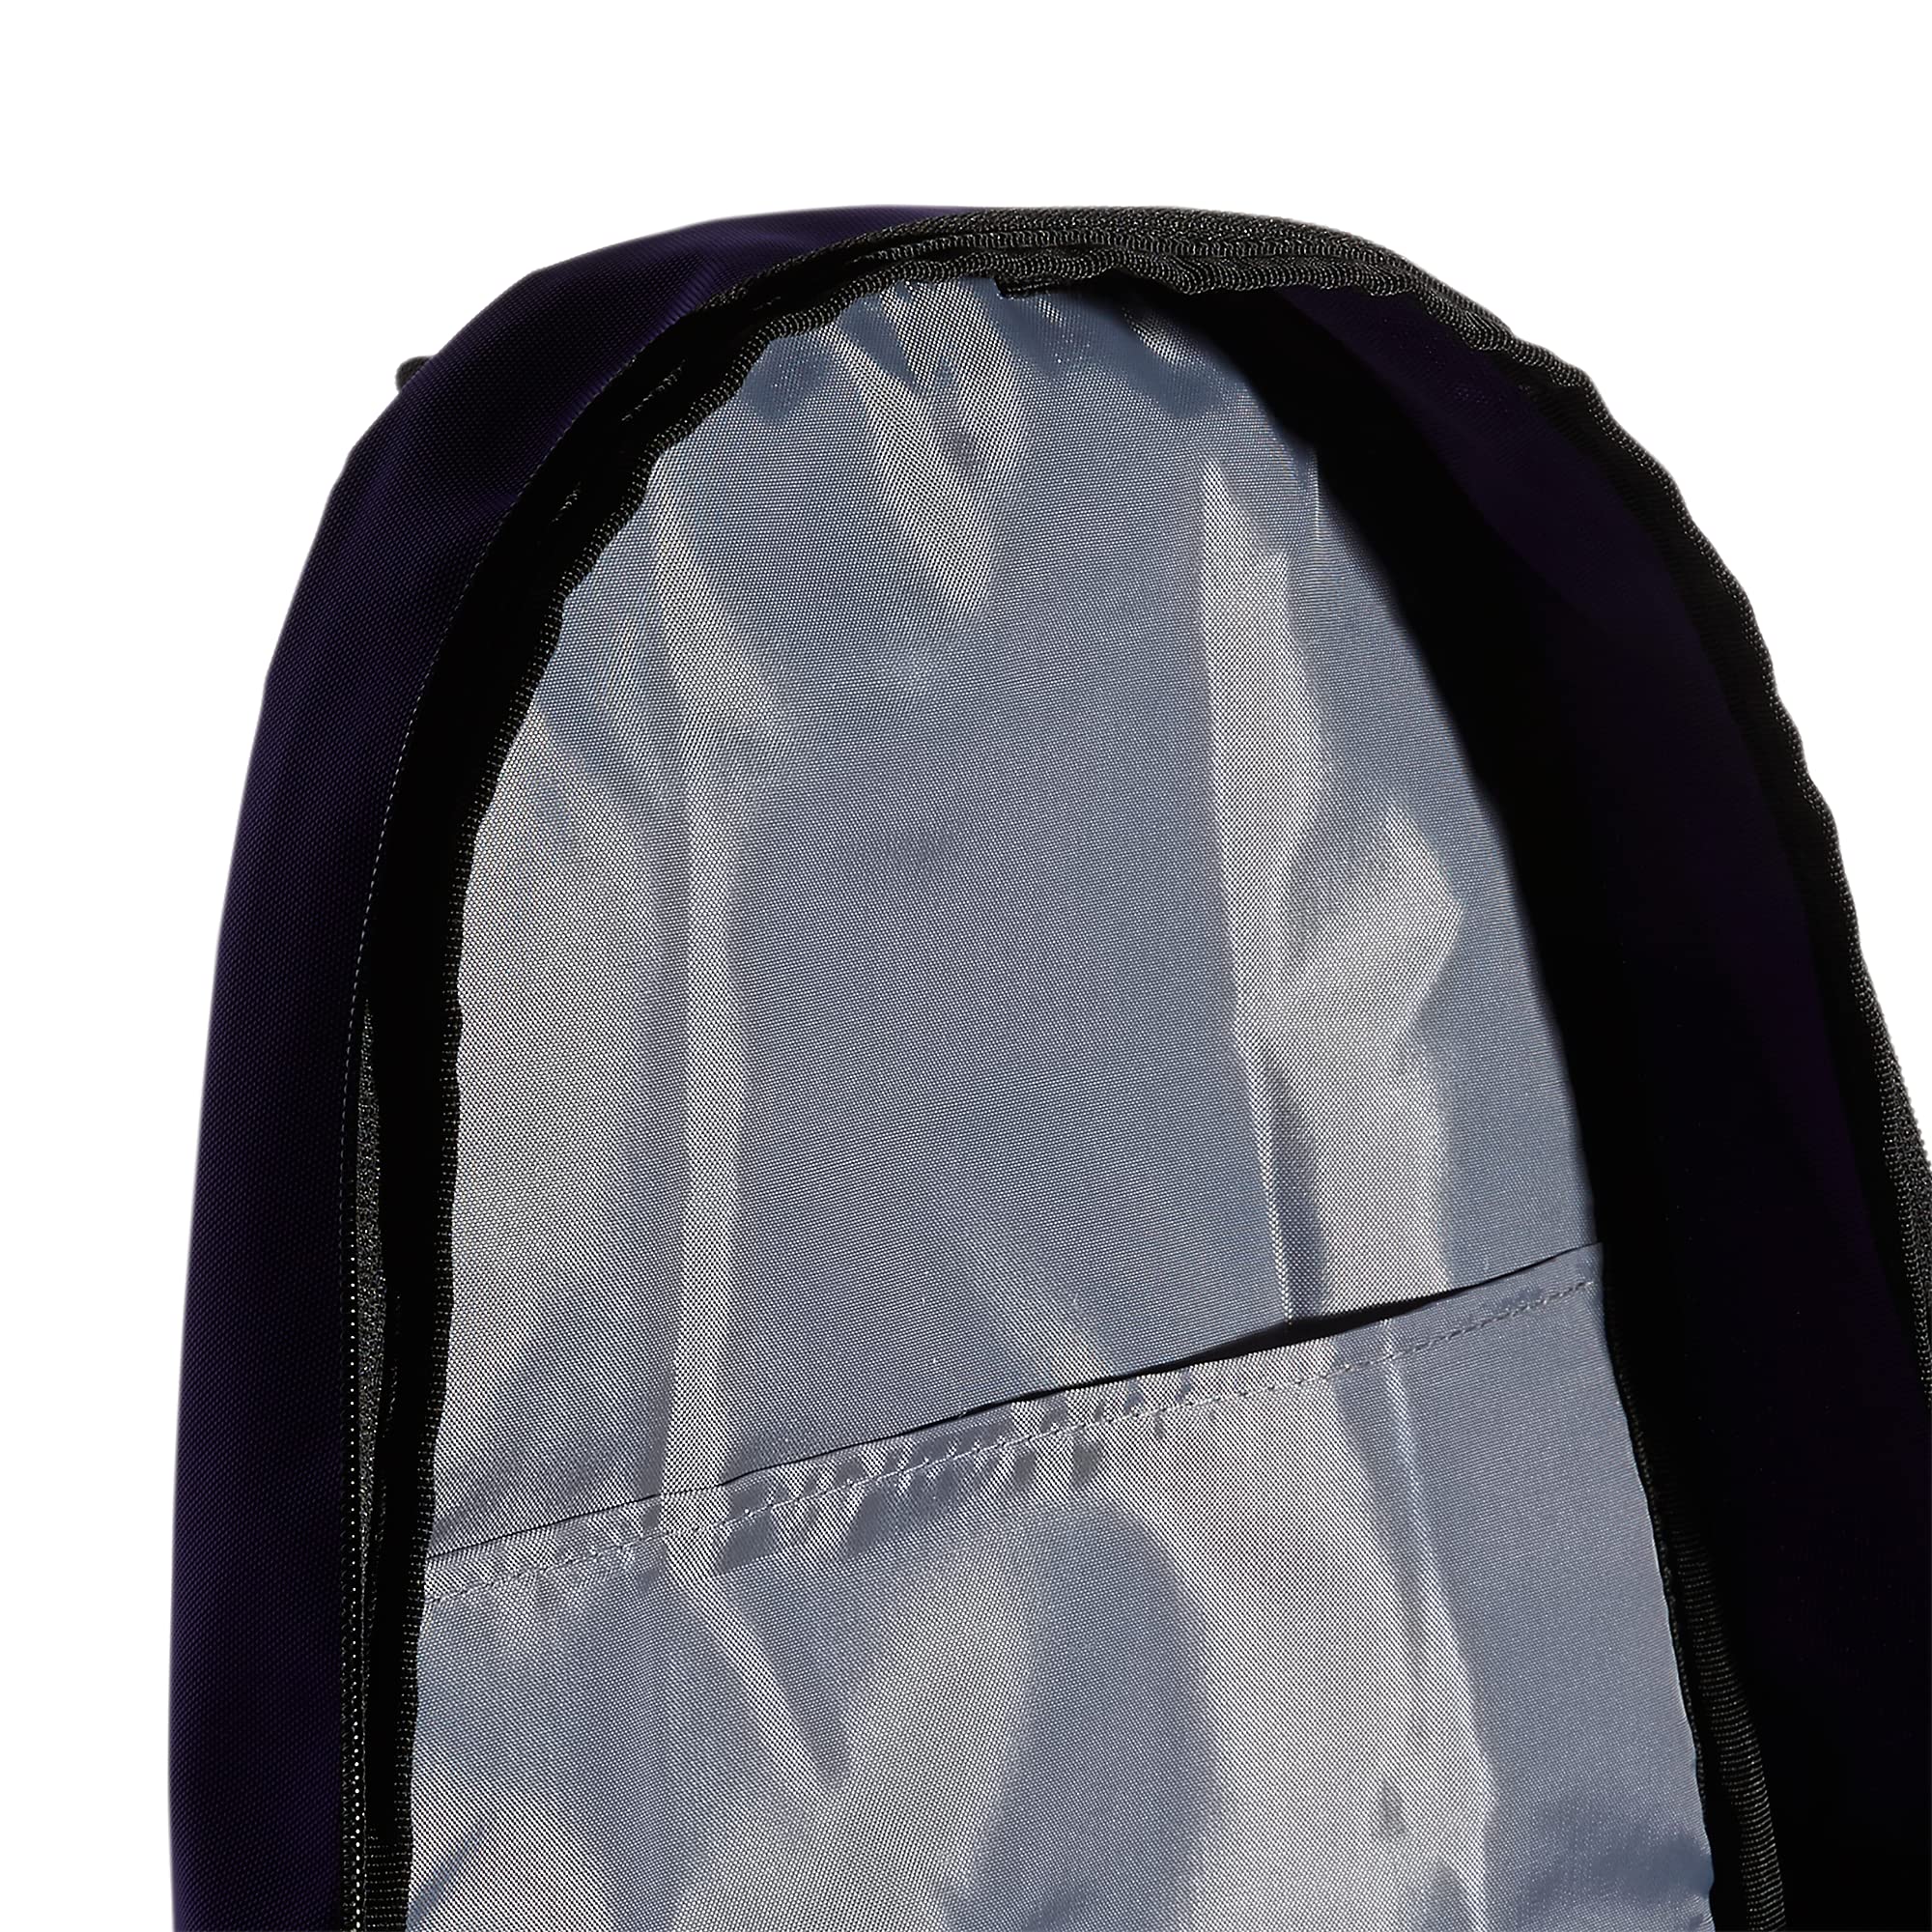 adidas Striker 2 Backpack, Team Collegiate Purple/Black/White, One Size